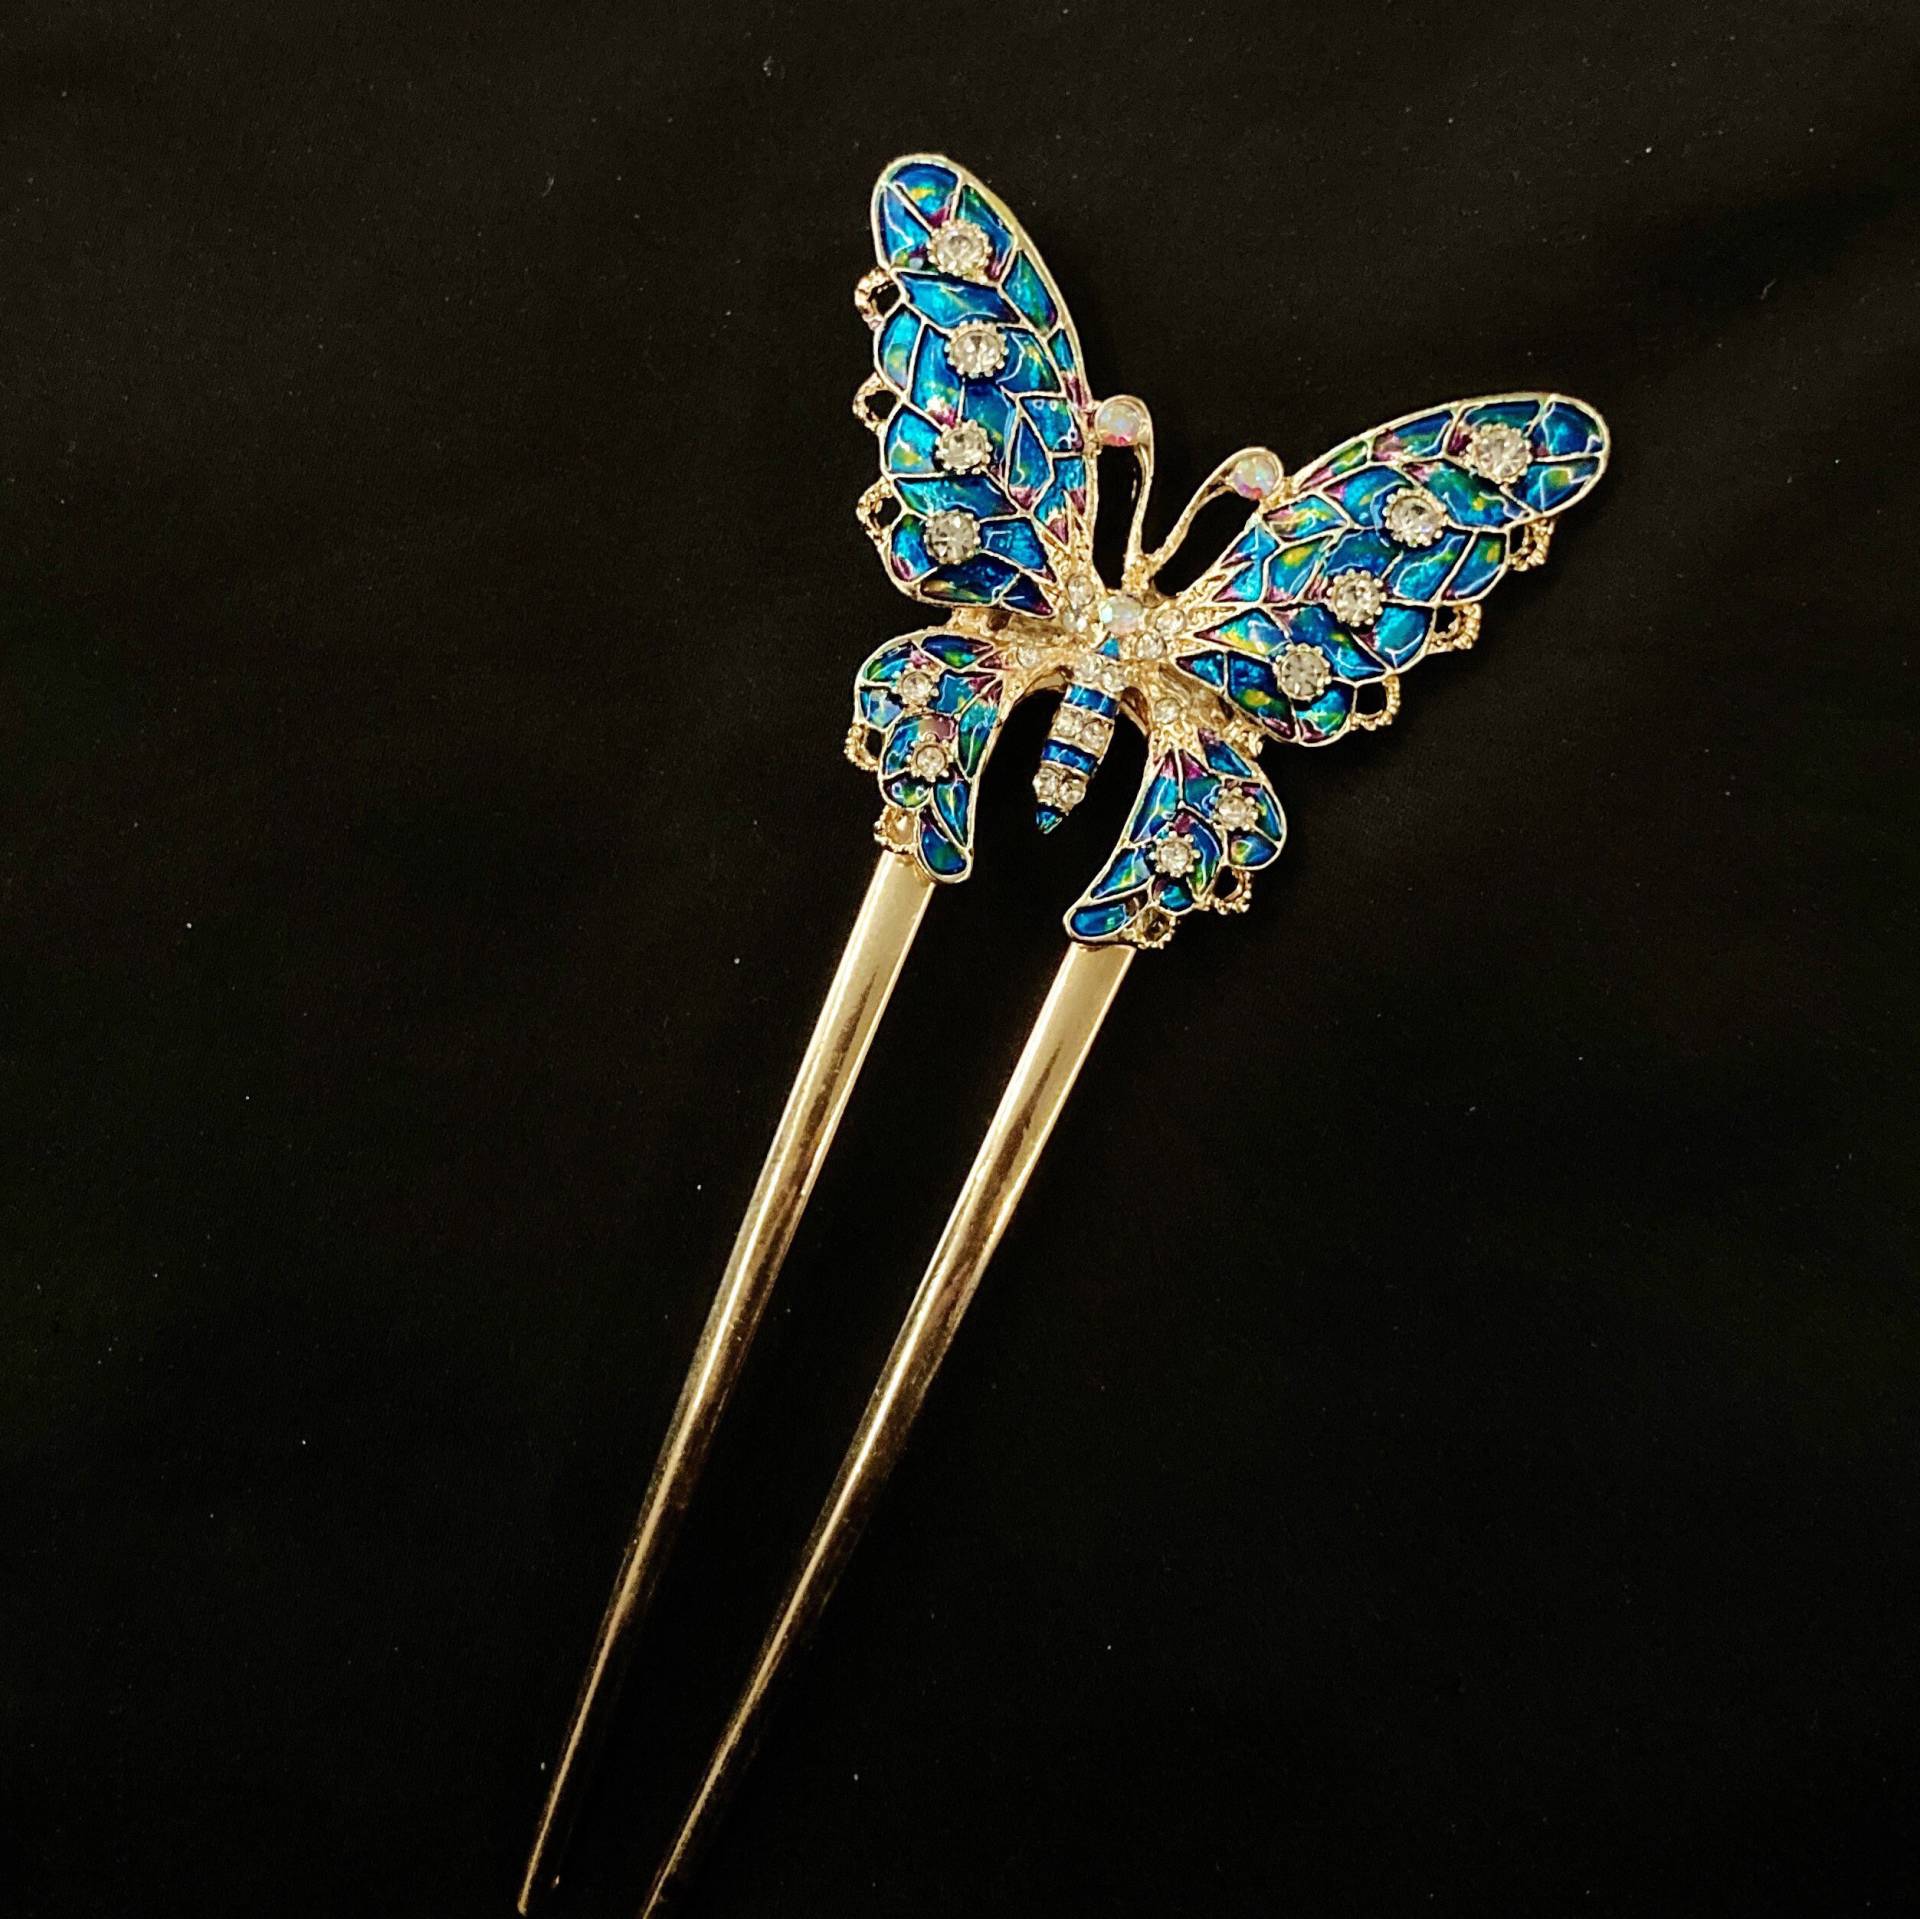 U-Förmige Haargabel, Blauer Schmetterling, Juwelen Schmetterlings-Haargabel, Blaue Emaille, Schmetterlingshaar, Funkelnder Etwas Blaues von PopBangBoom